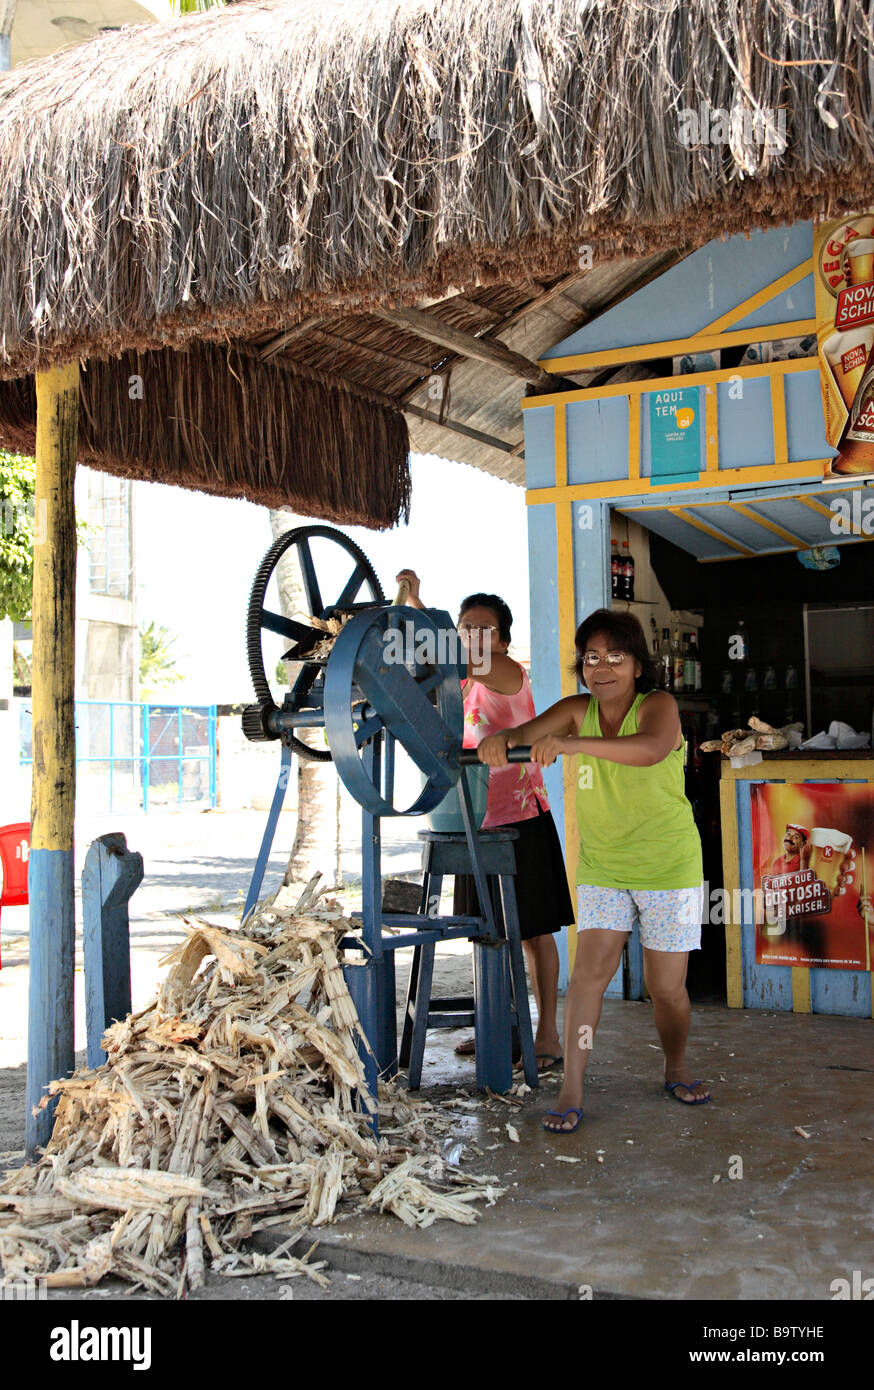 Sugacane juice vendors in Canavieiras Bahia Brazil South America Stock Photo